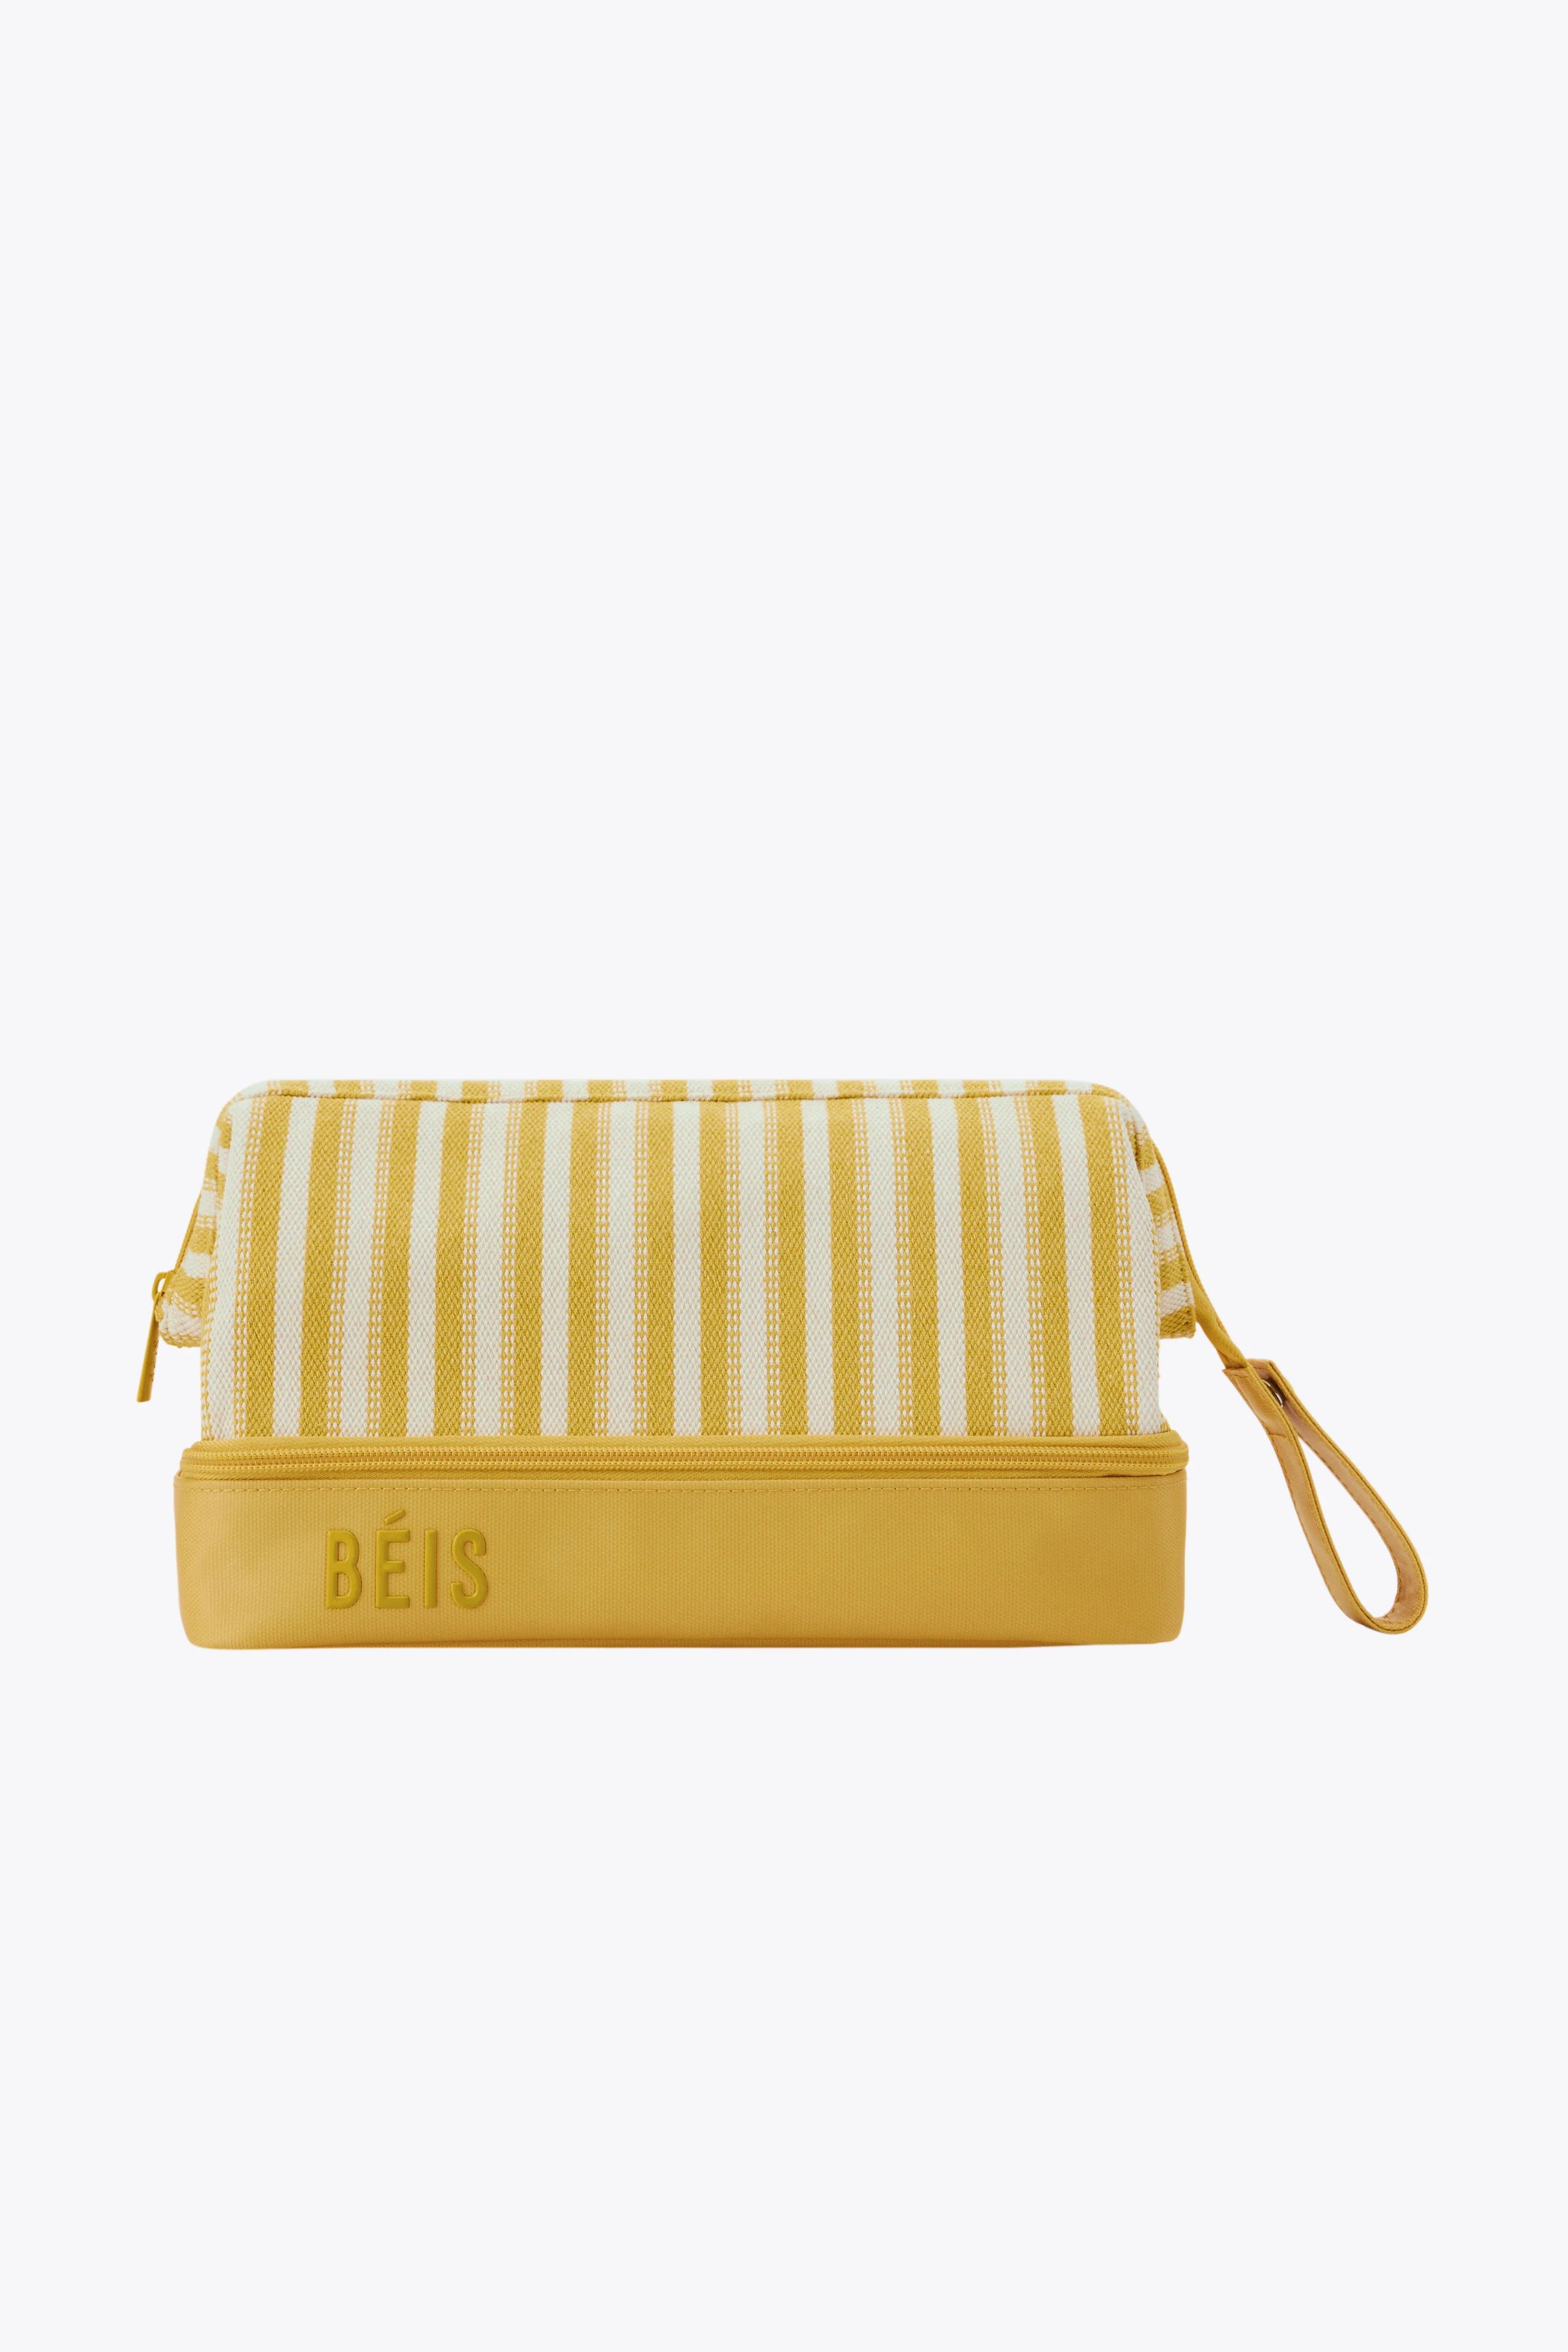 BÉIS 'The Dopp Kit' in Honey Stripe - Yellow Striped Dopp Kit & Toiletries Bag | BÉIS Travel